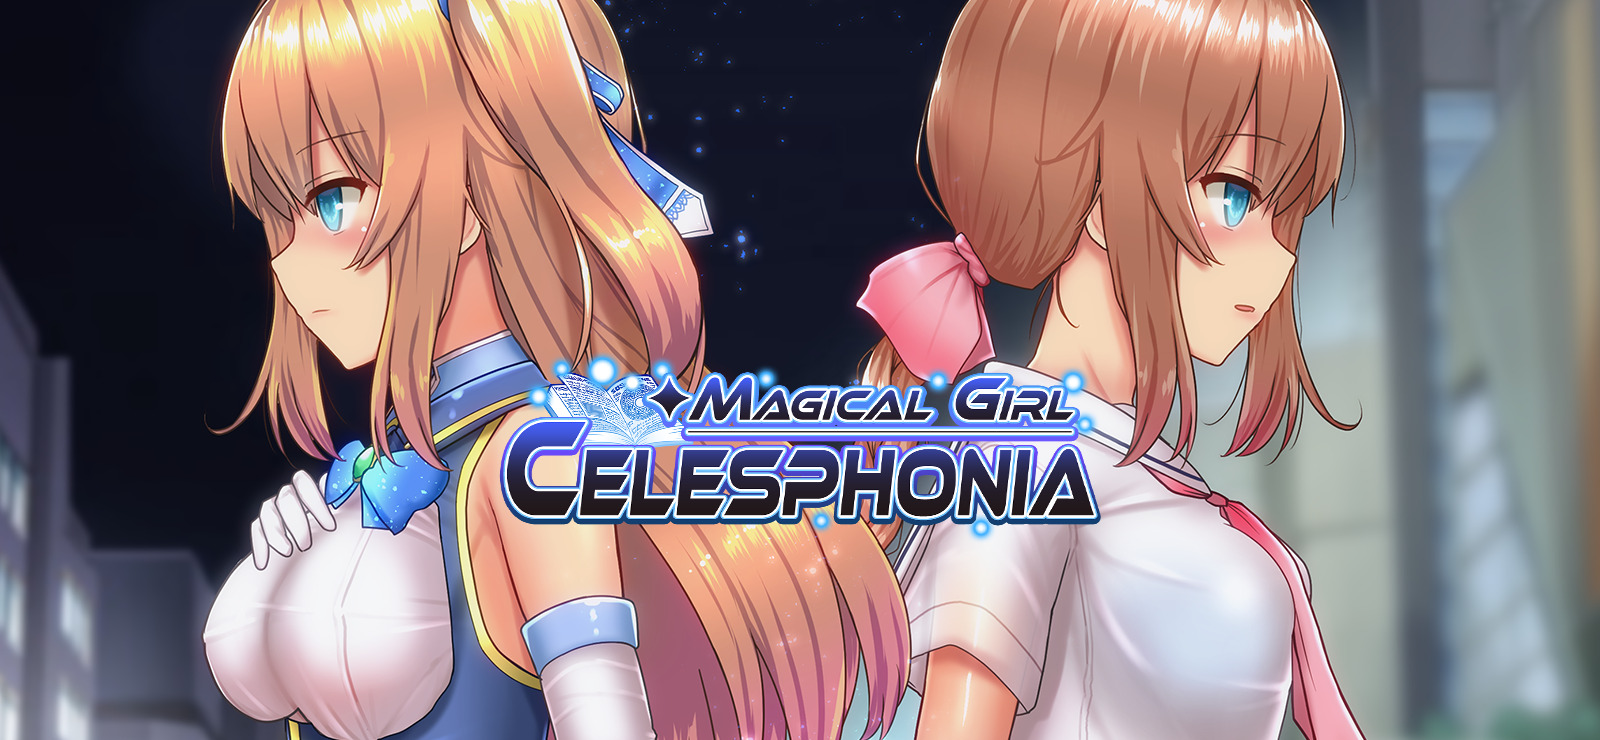 Magical girl celesphonia download